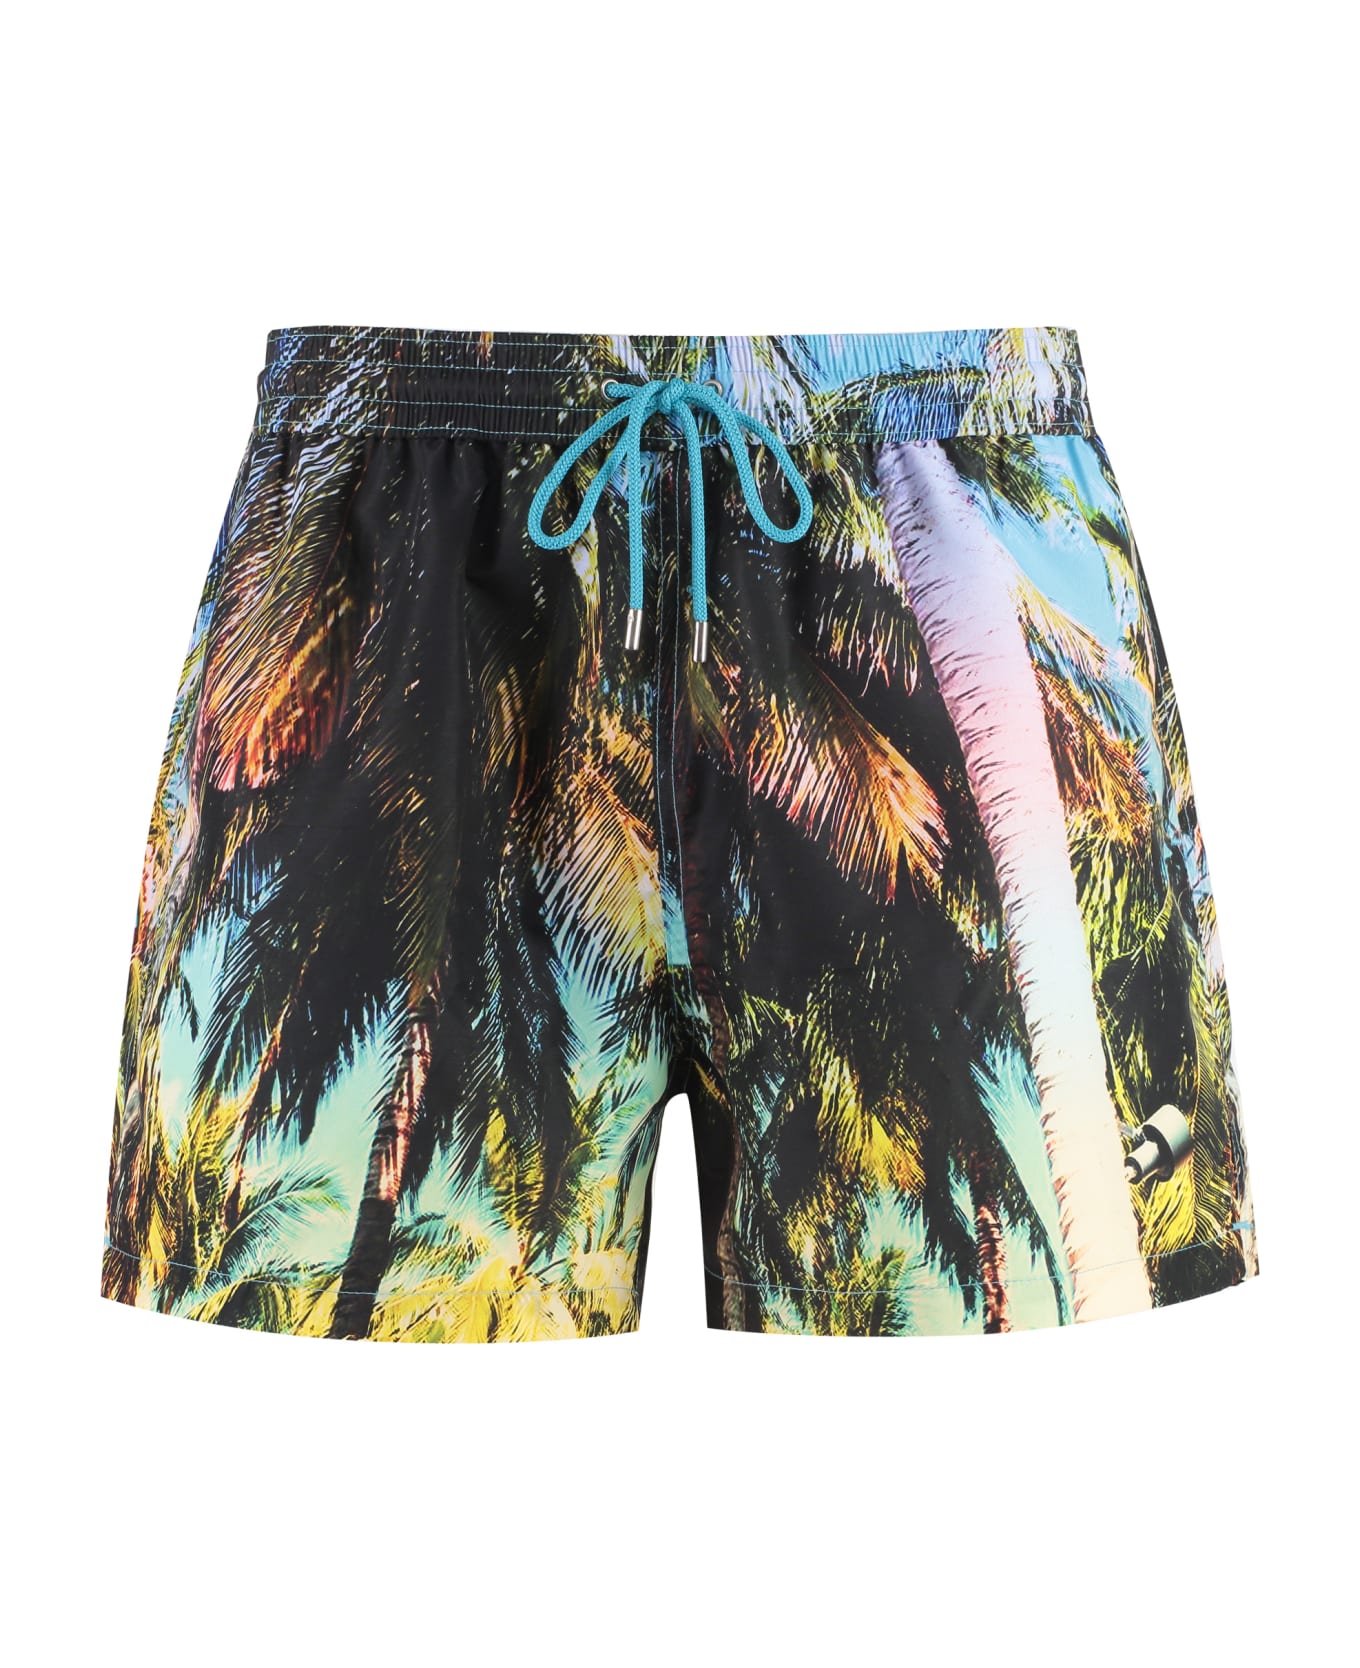 Paul Smith Printed Swim Shorts - Multicolor